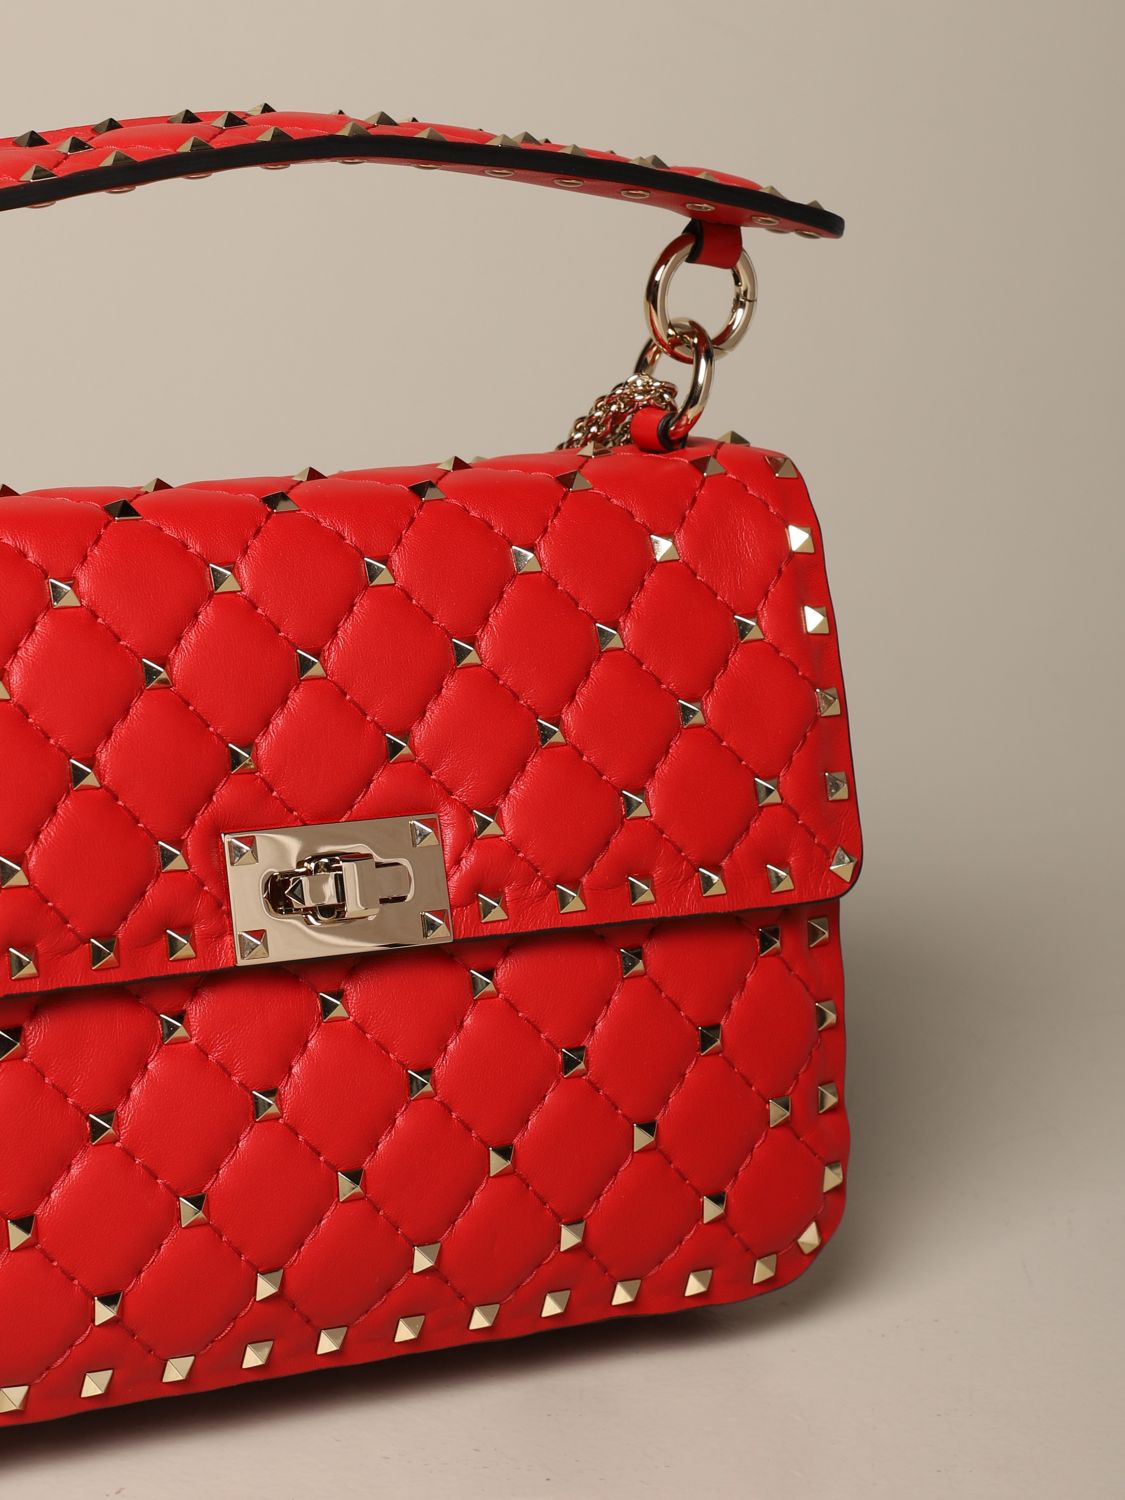 VALENTINO GARAVANI: Rockstud Spike micro leather bag - Red  Valentino  Garavani mini bag UW2B0G36 NAP online at